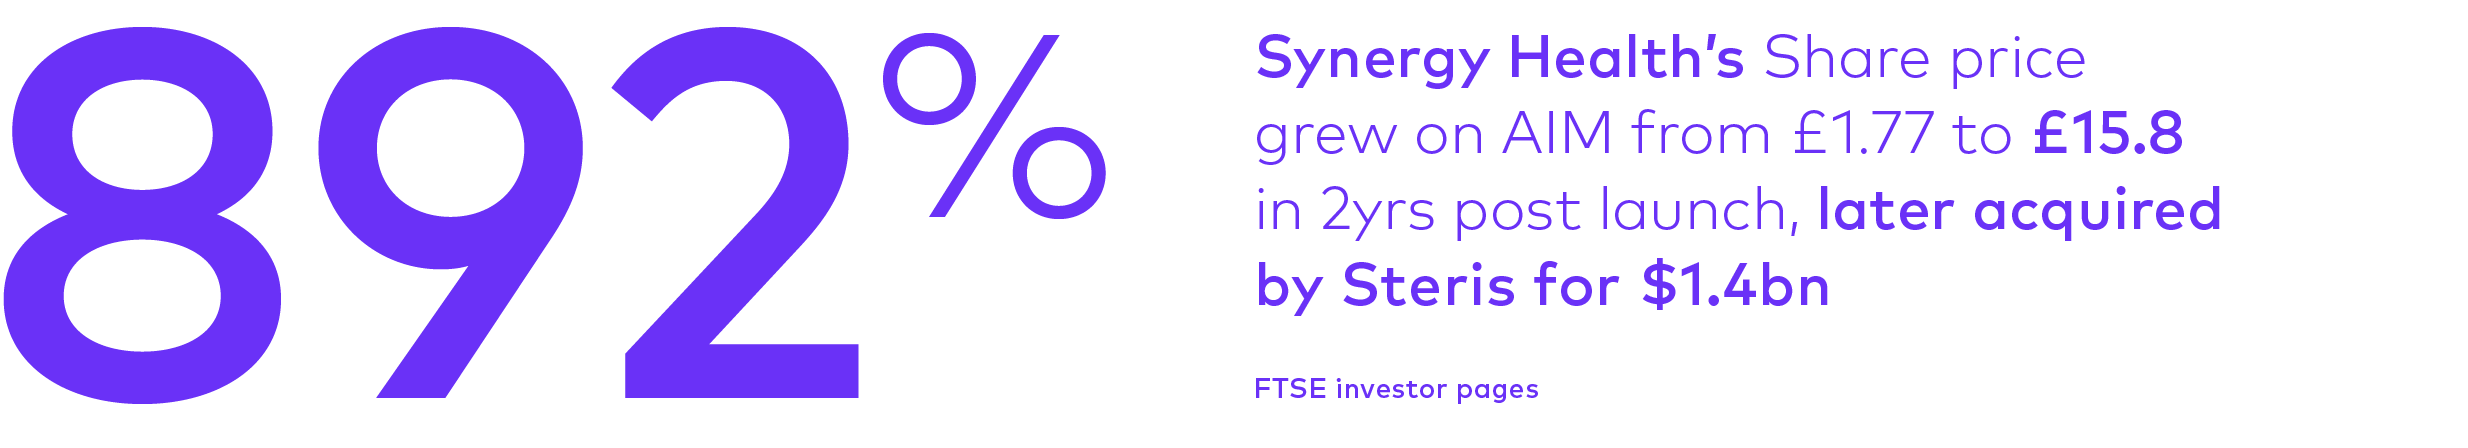 Synergy Health 894% share price growth